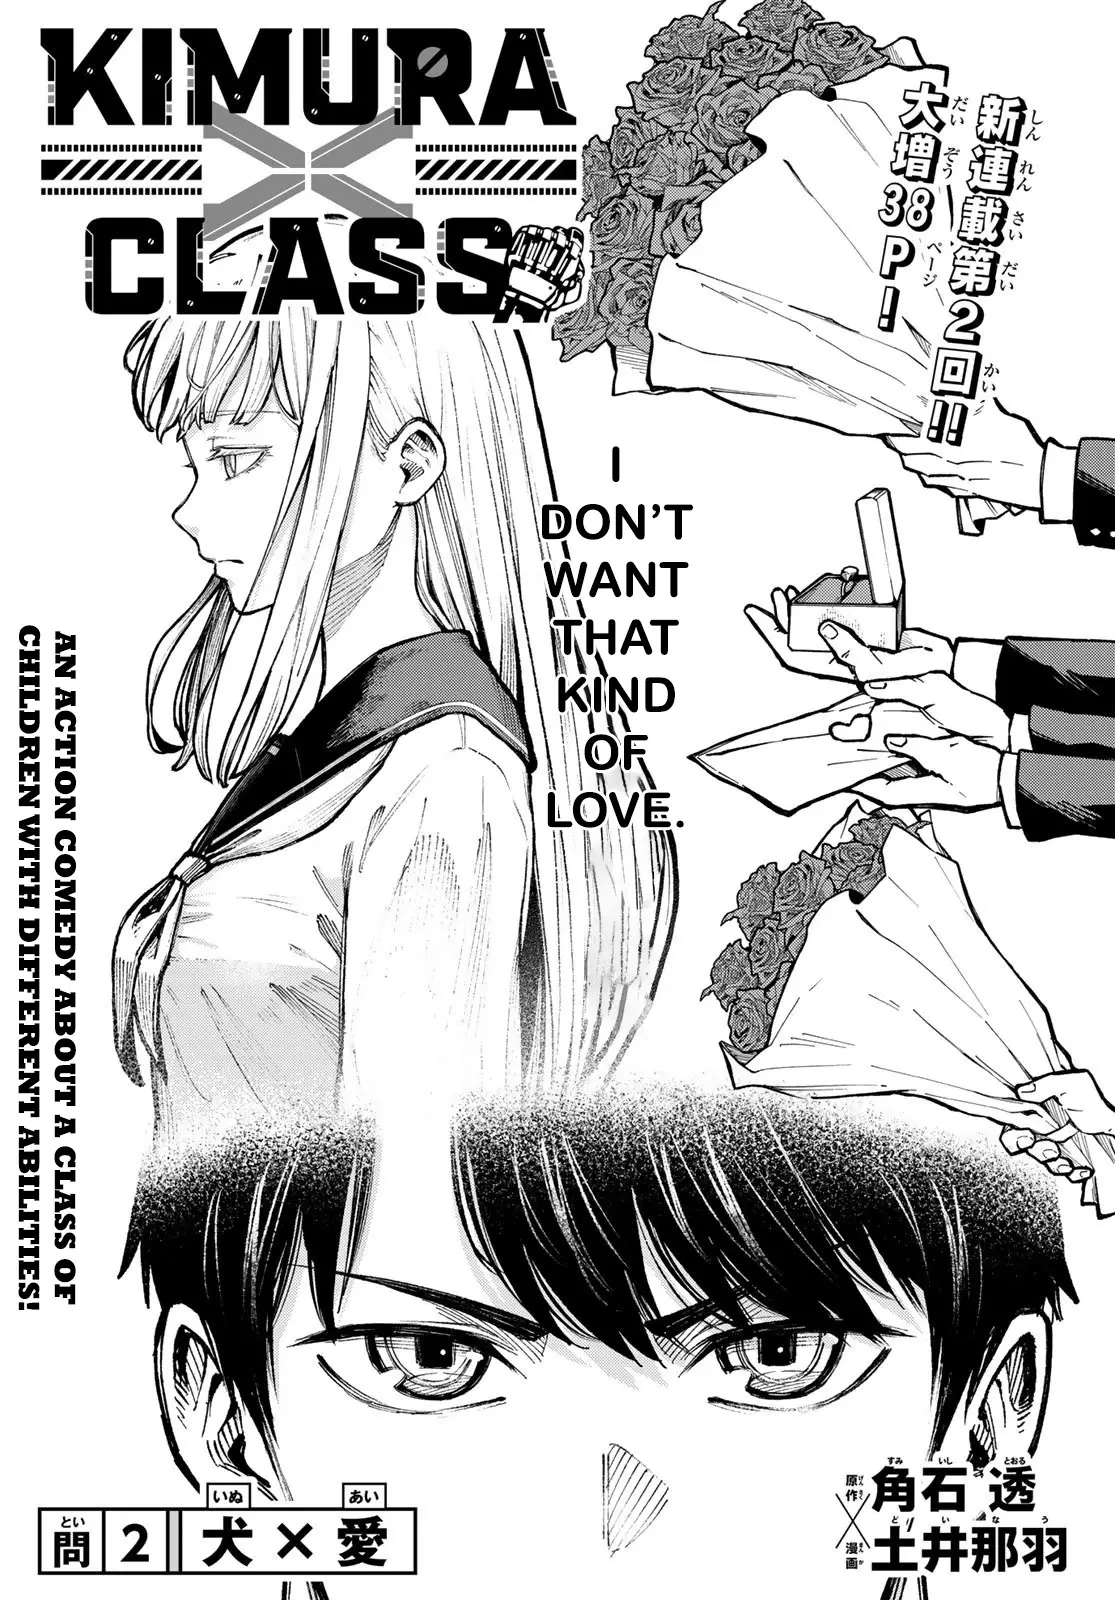 Kimura X Class - 2 page 1-52a745a8